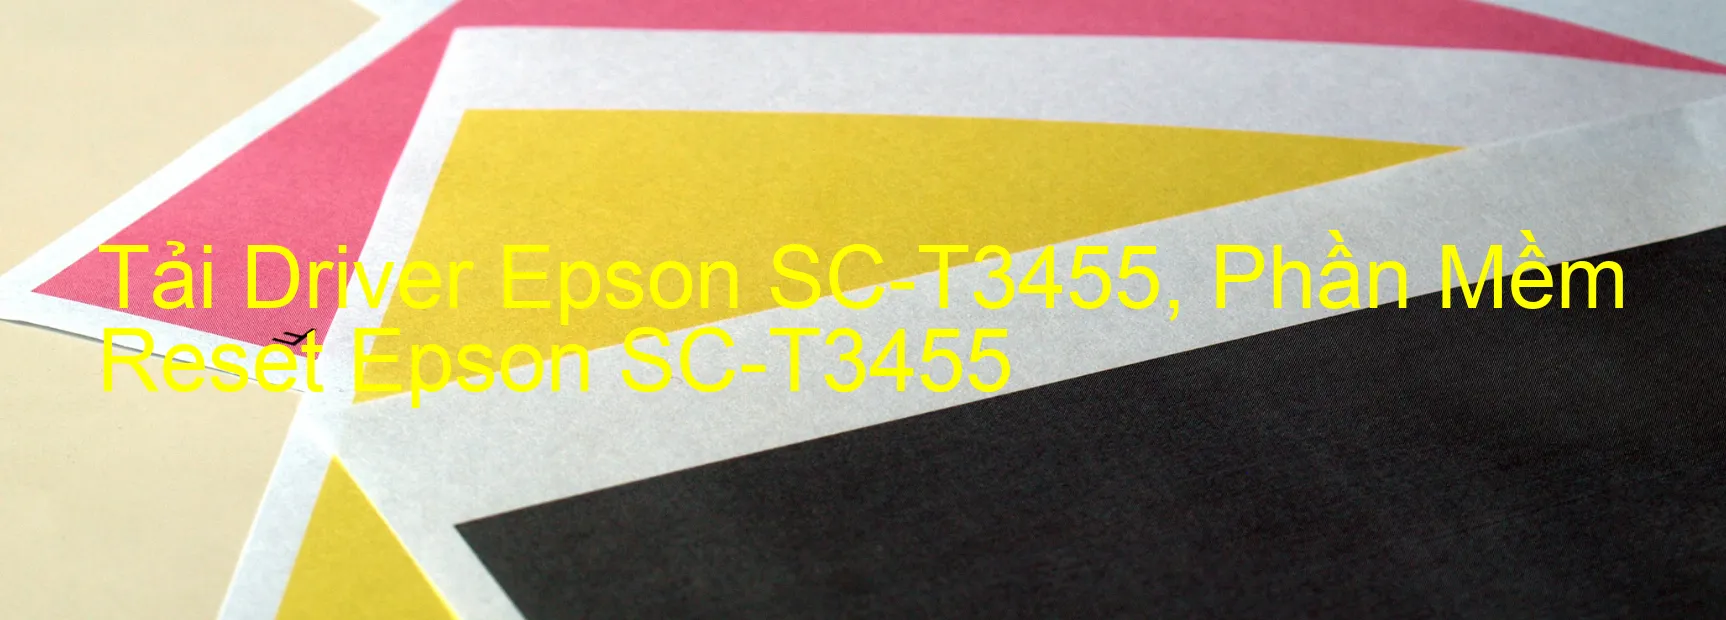 Driver Epson SC-T3455, Phần Mềm Reset Epson SC-T3455